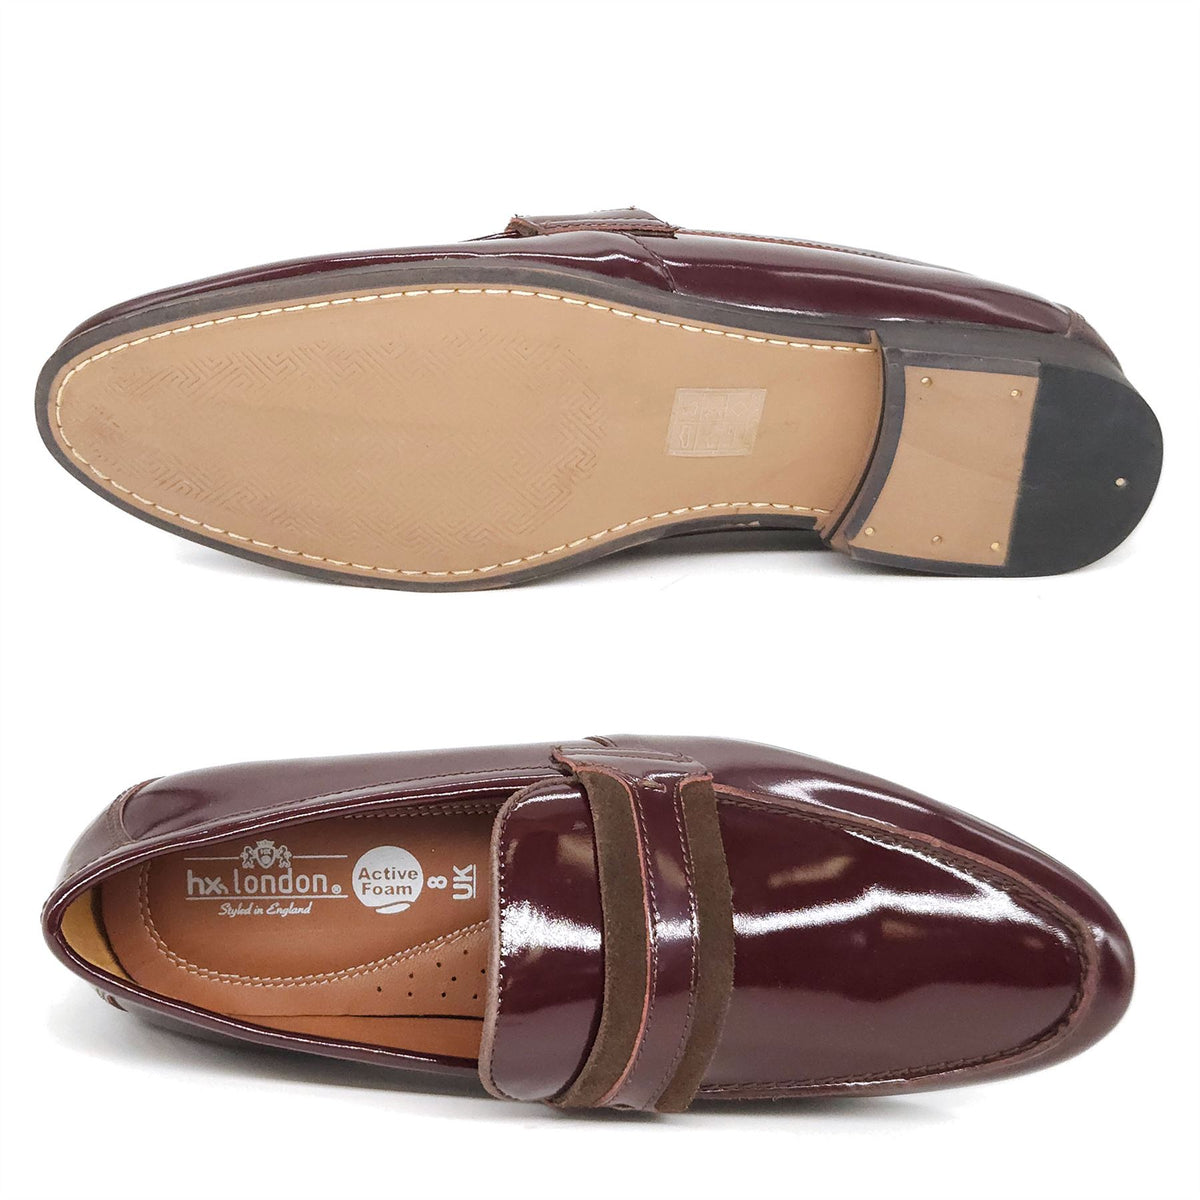 HX London Croydon Patent Leather Loafers